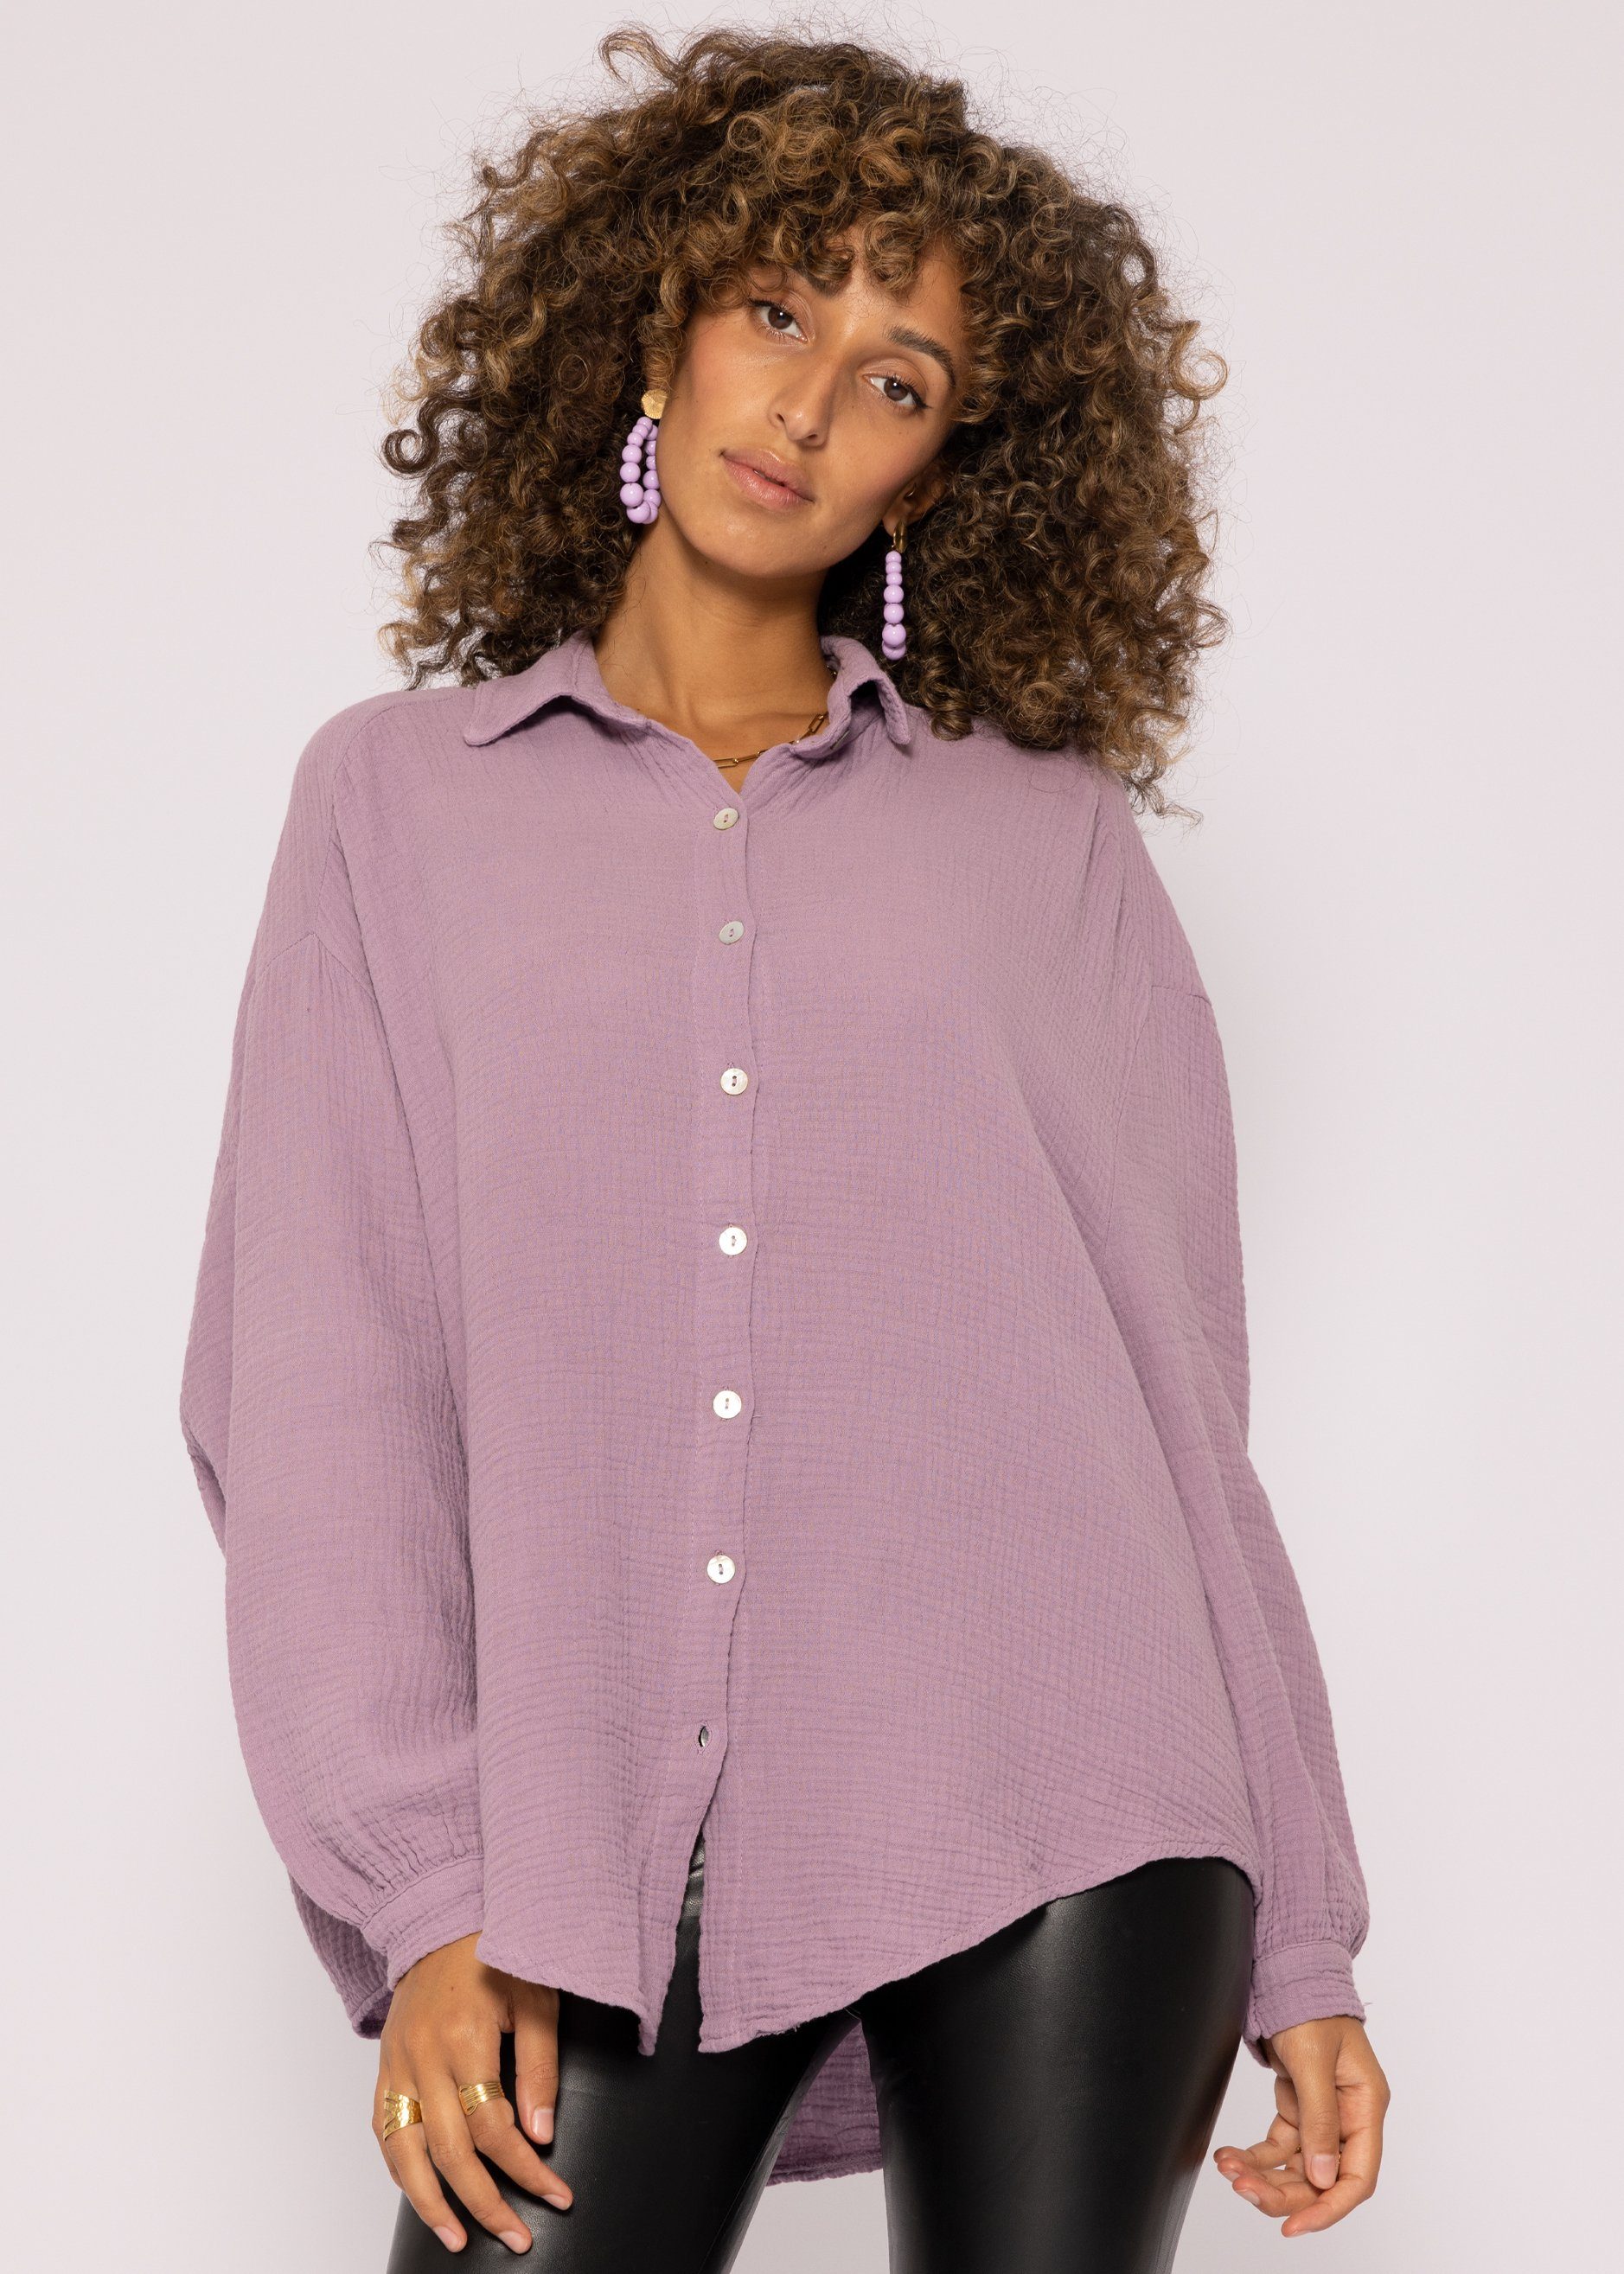 SASSYCLASSY Longbluse Oversize Musselin Bluse Damen Langarm Hemdbluse lang aus Baumwolle mit V-Ausschnitt, One Size (Gr. 36-48) Violett